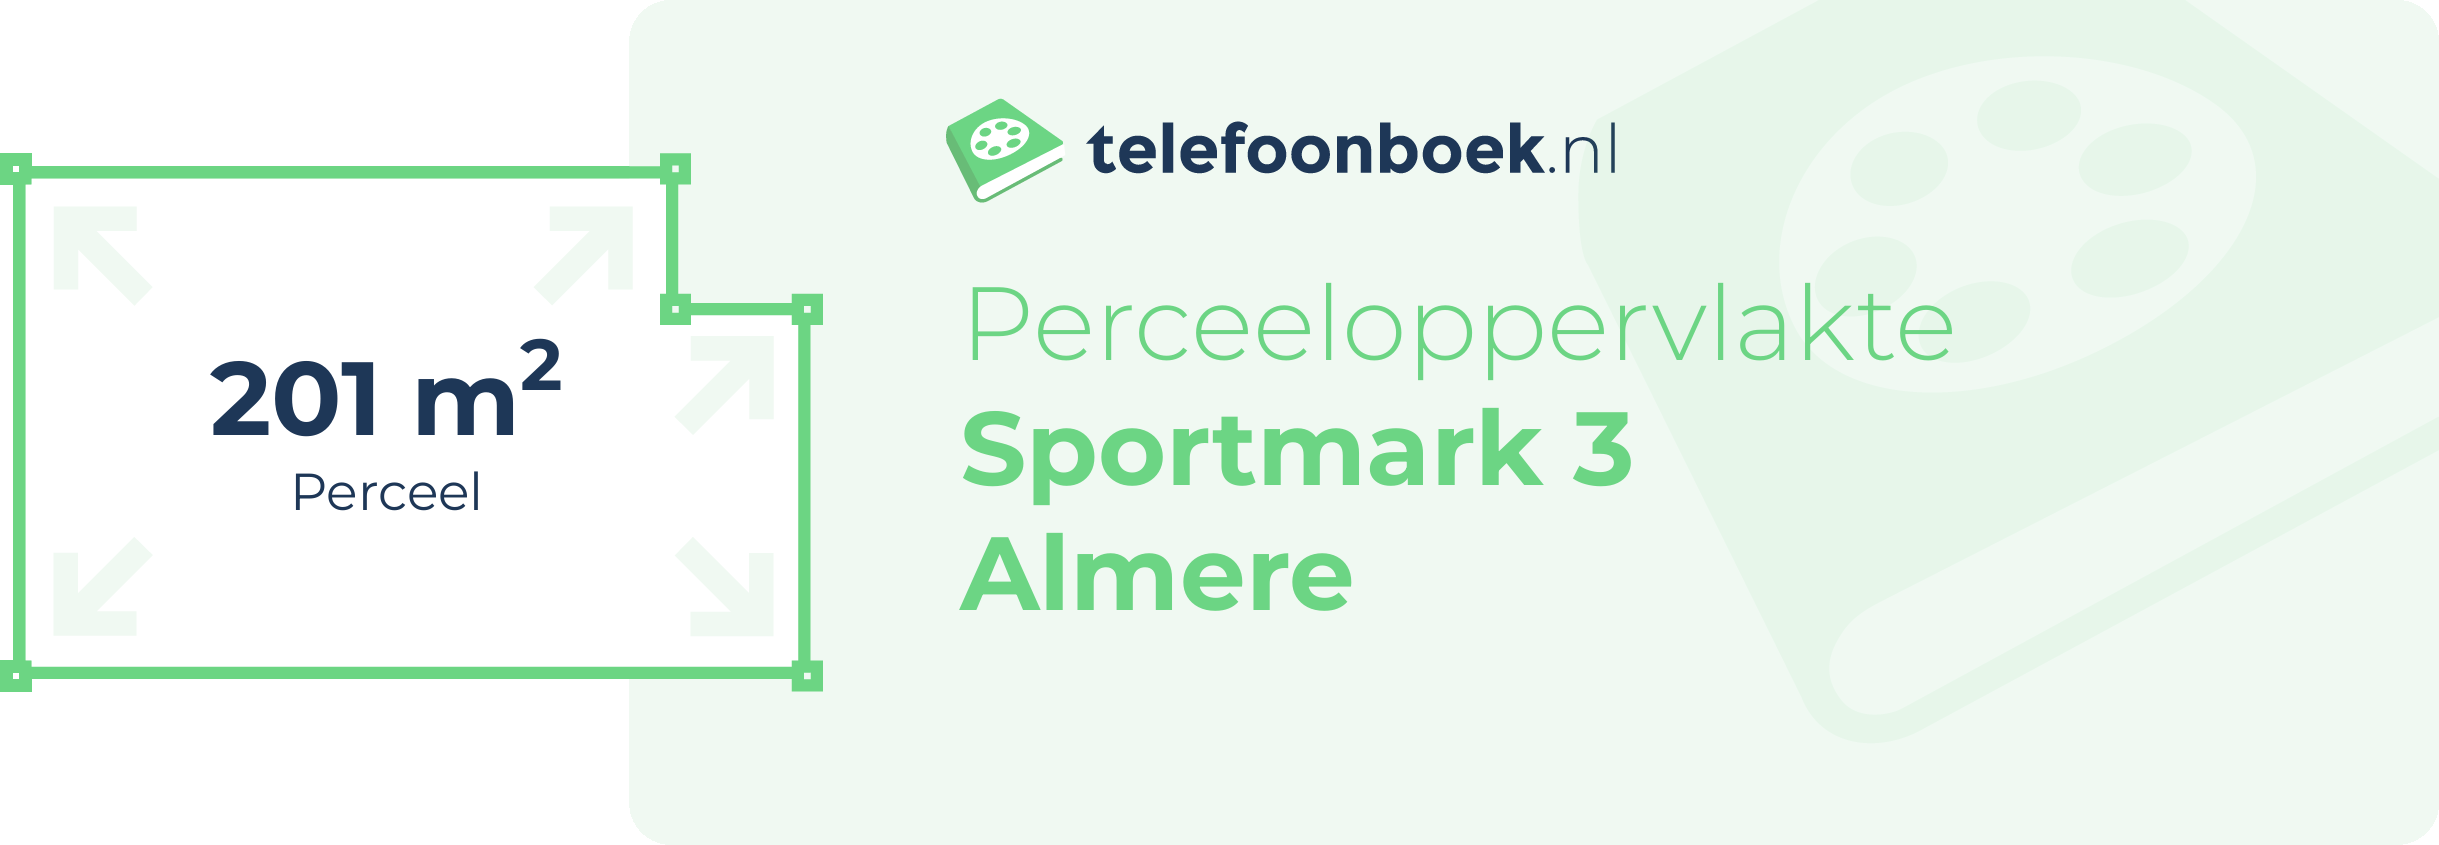 Perceeloppervlakte Sportmark 3 Almere